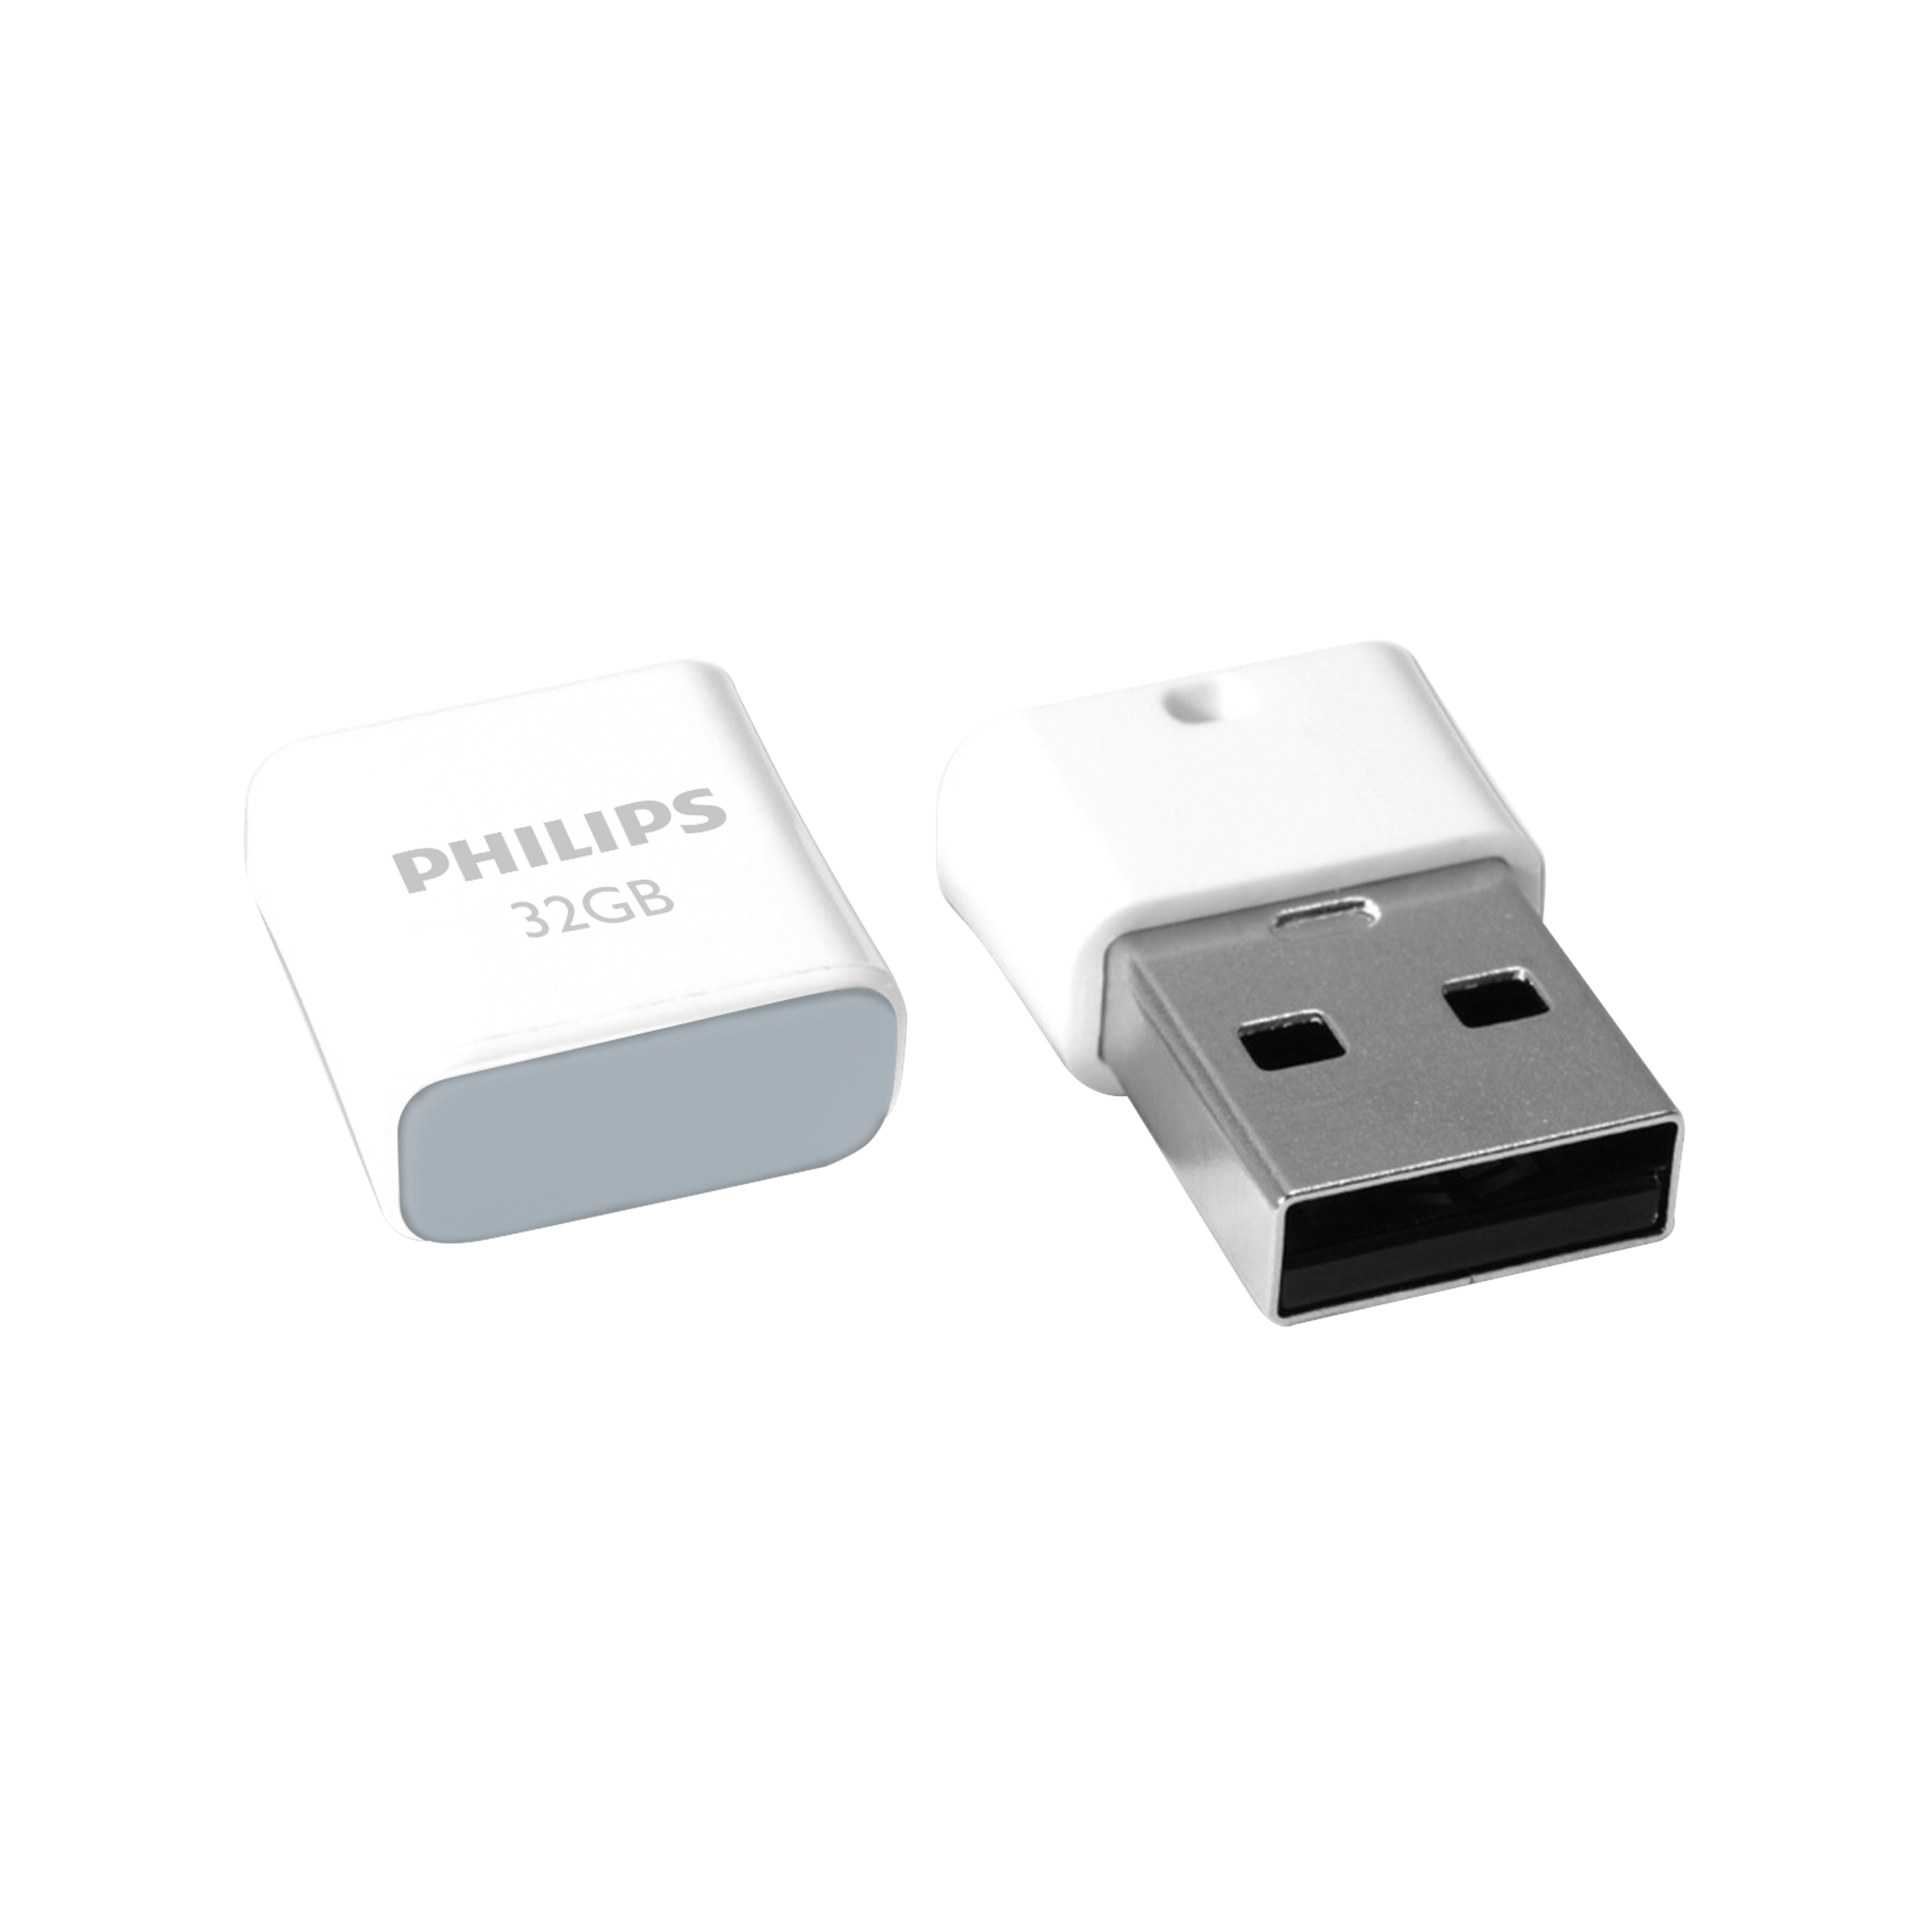 PHILIPS Pico (Weiß, Edition USB-Stick GB) 32